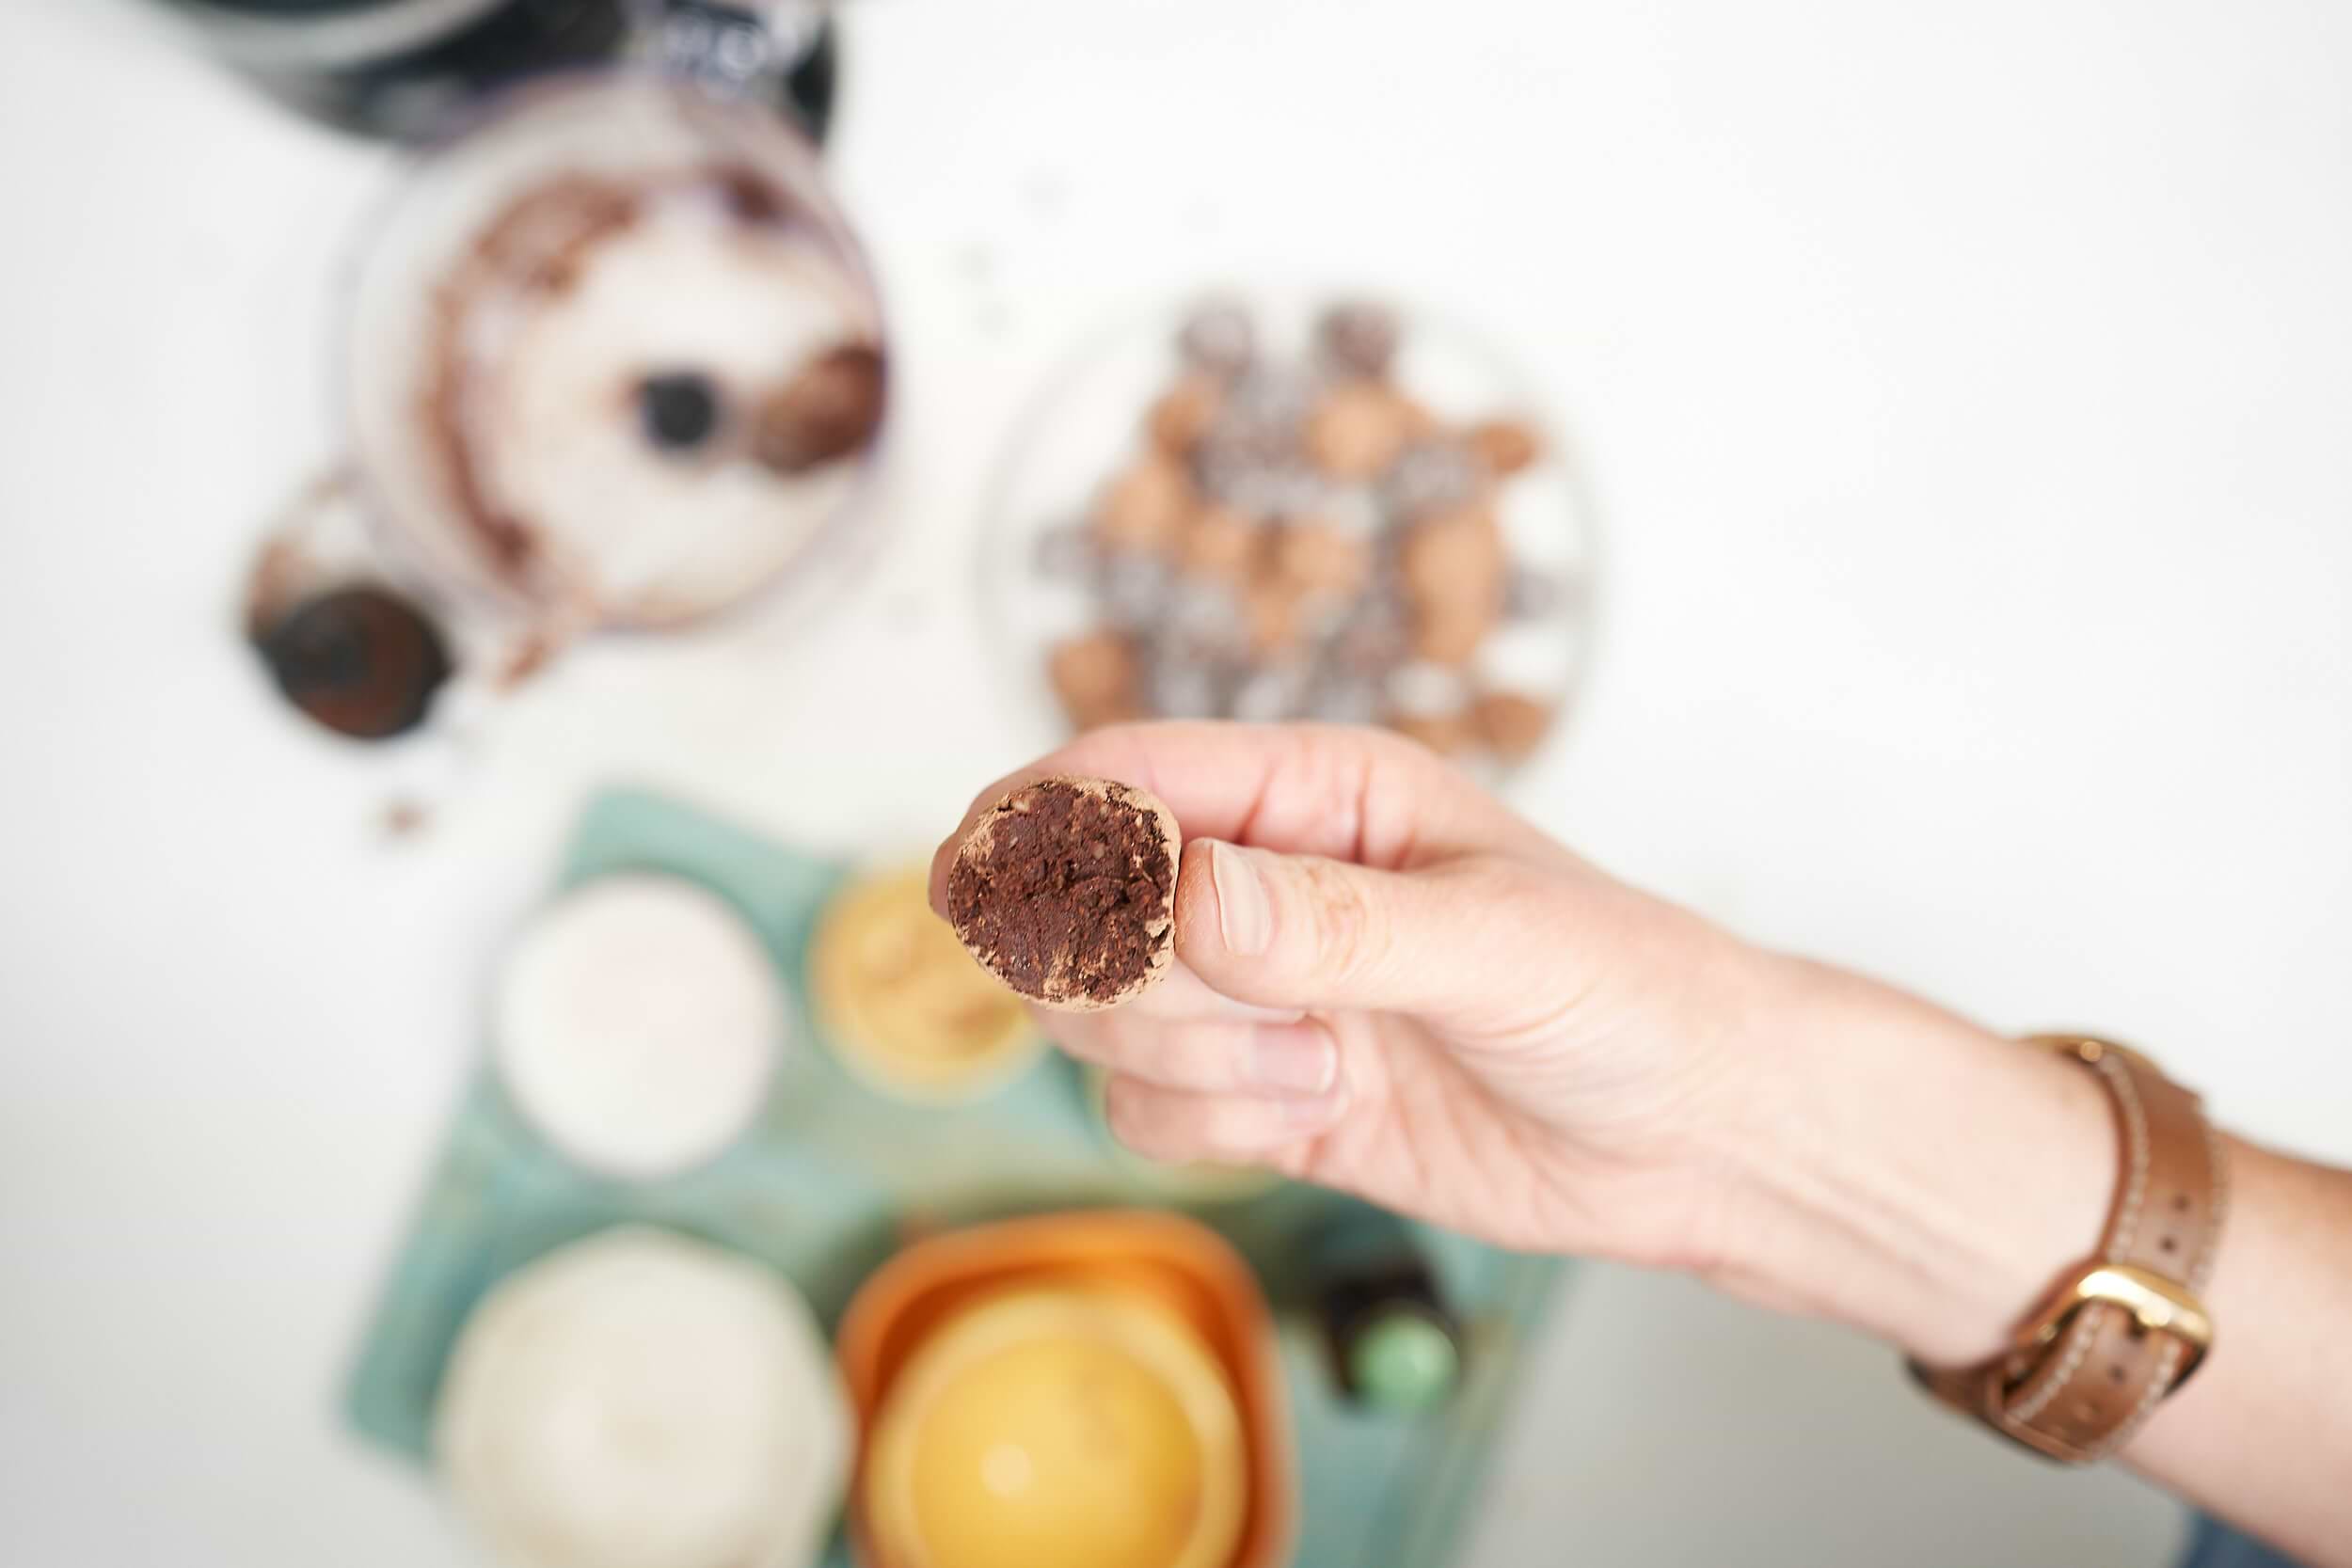 Inside of chocolate truffle